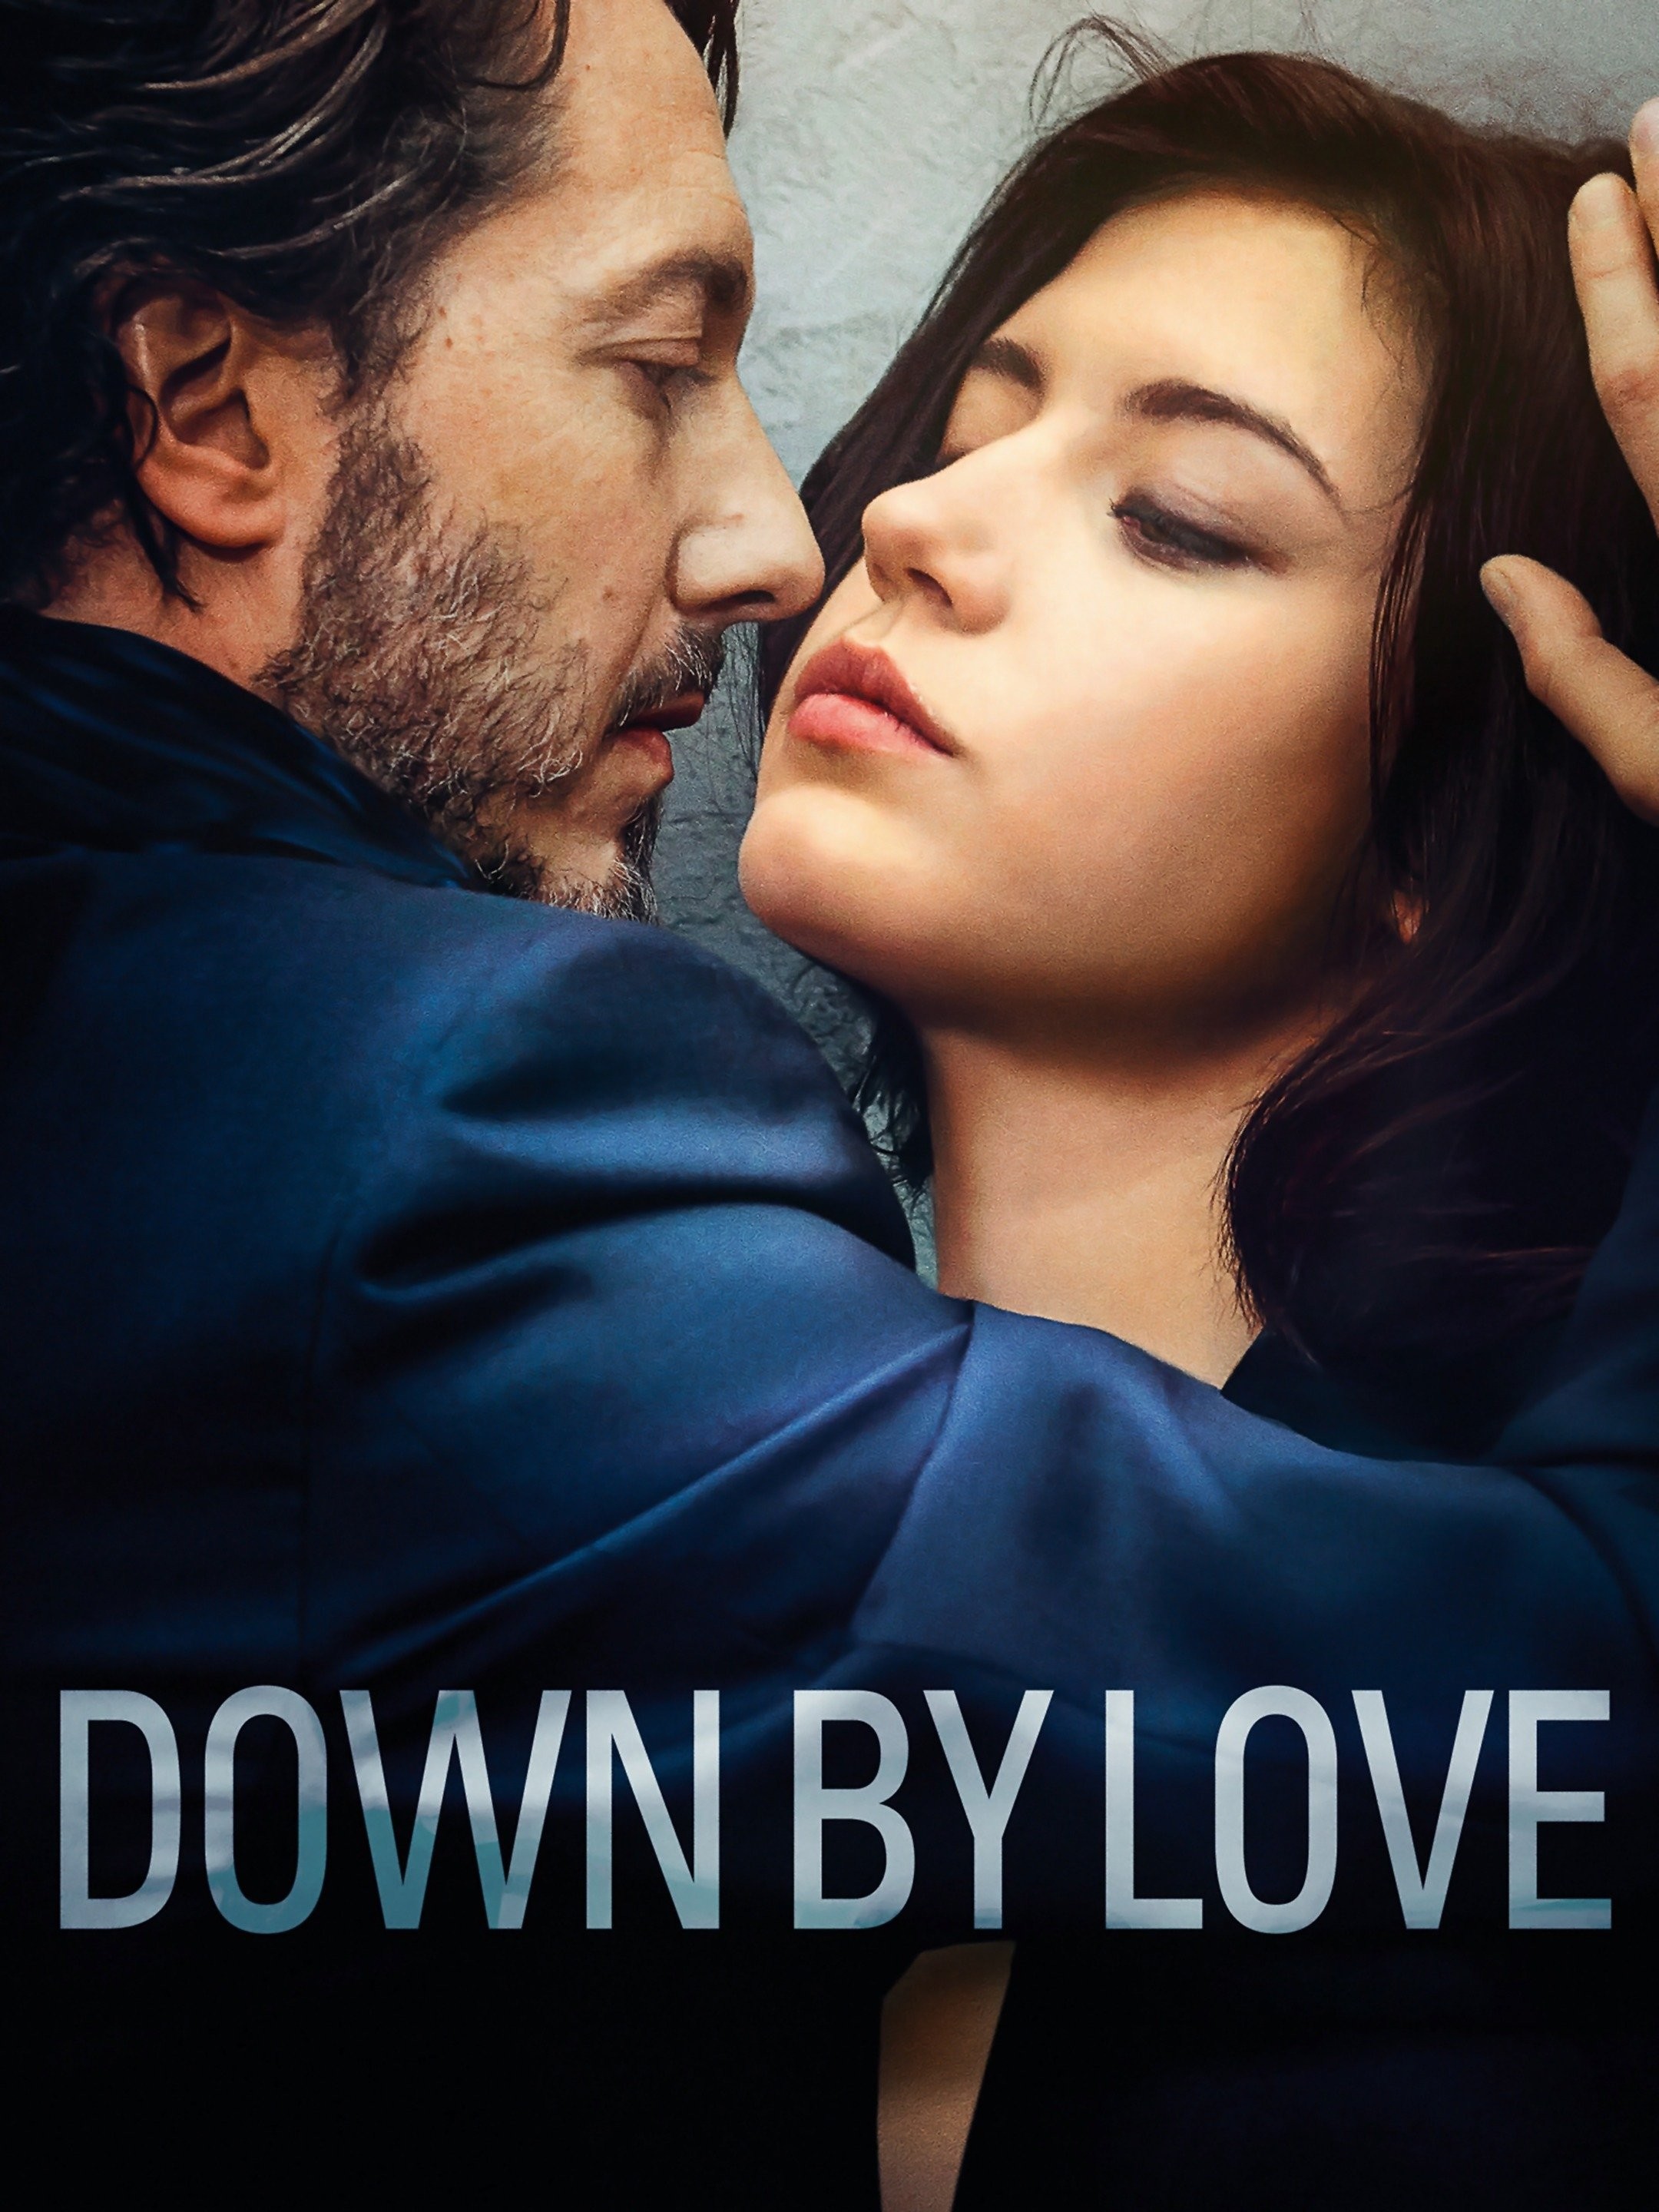 Down by love movie